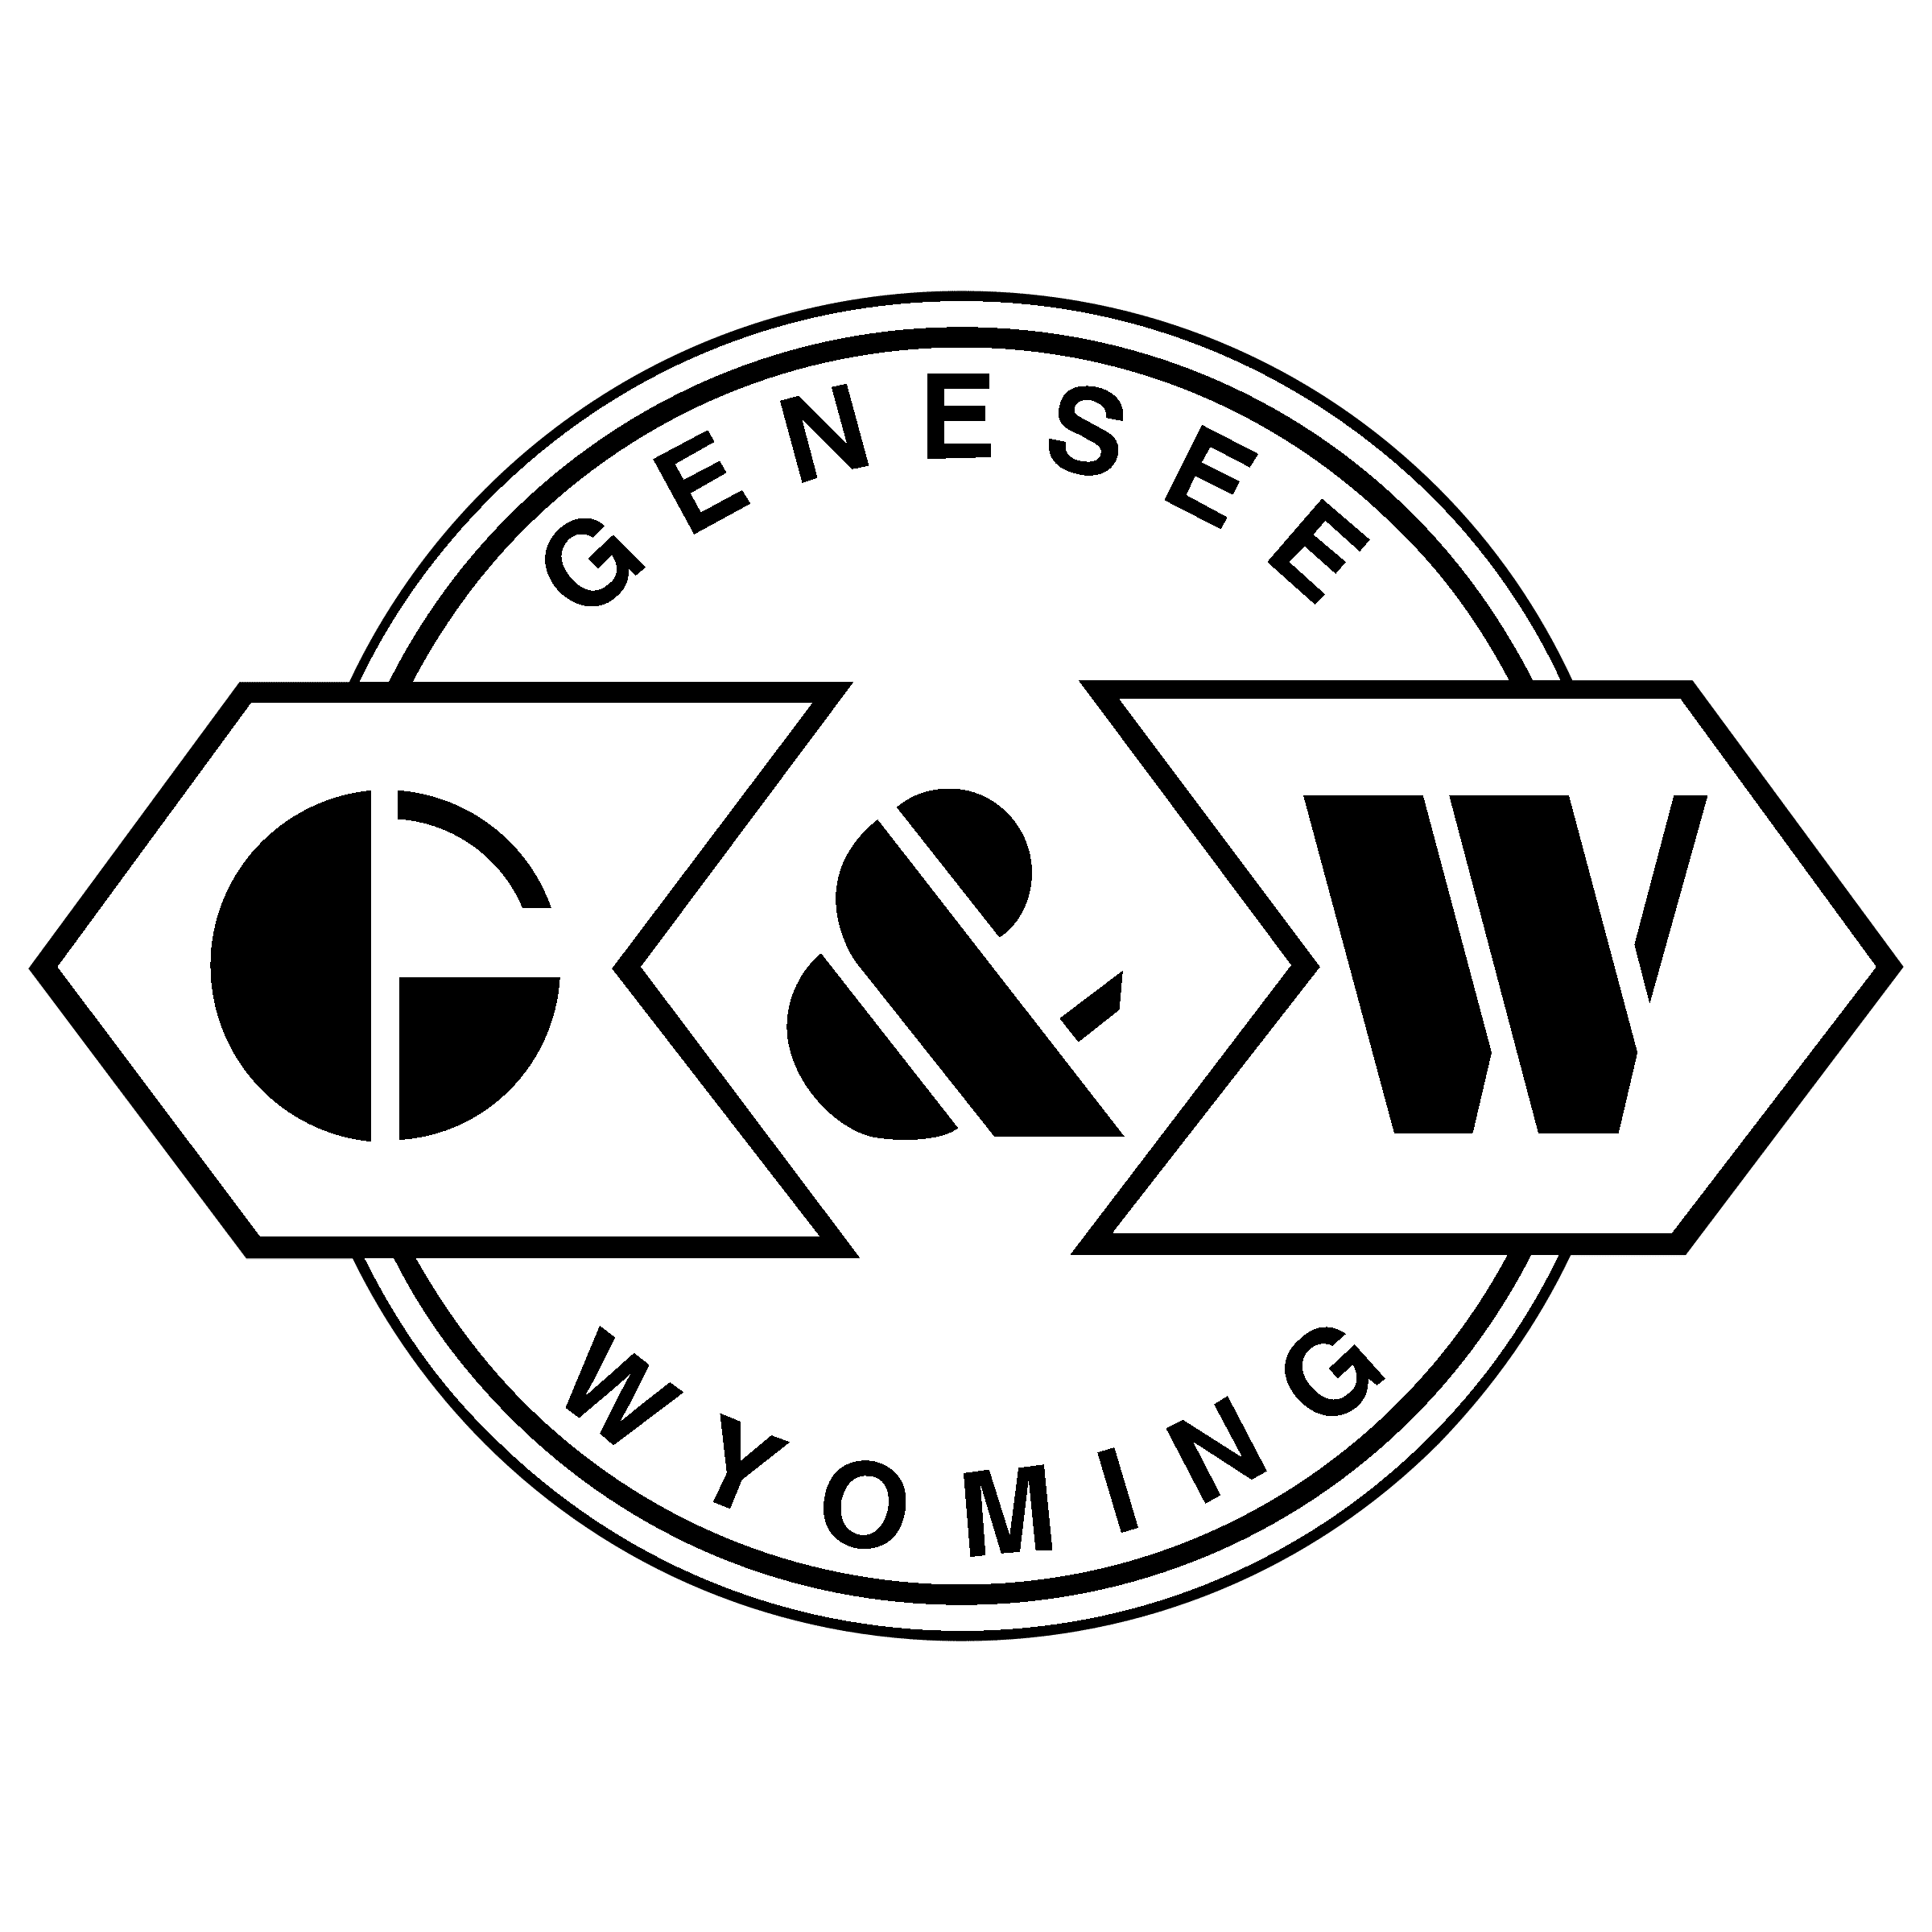 genesee-wyoming-logo-black-and-white